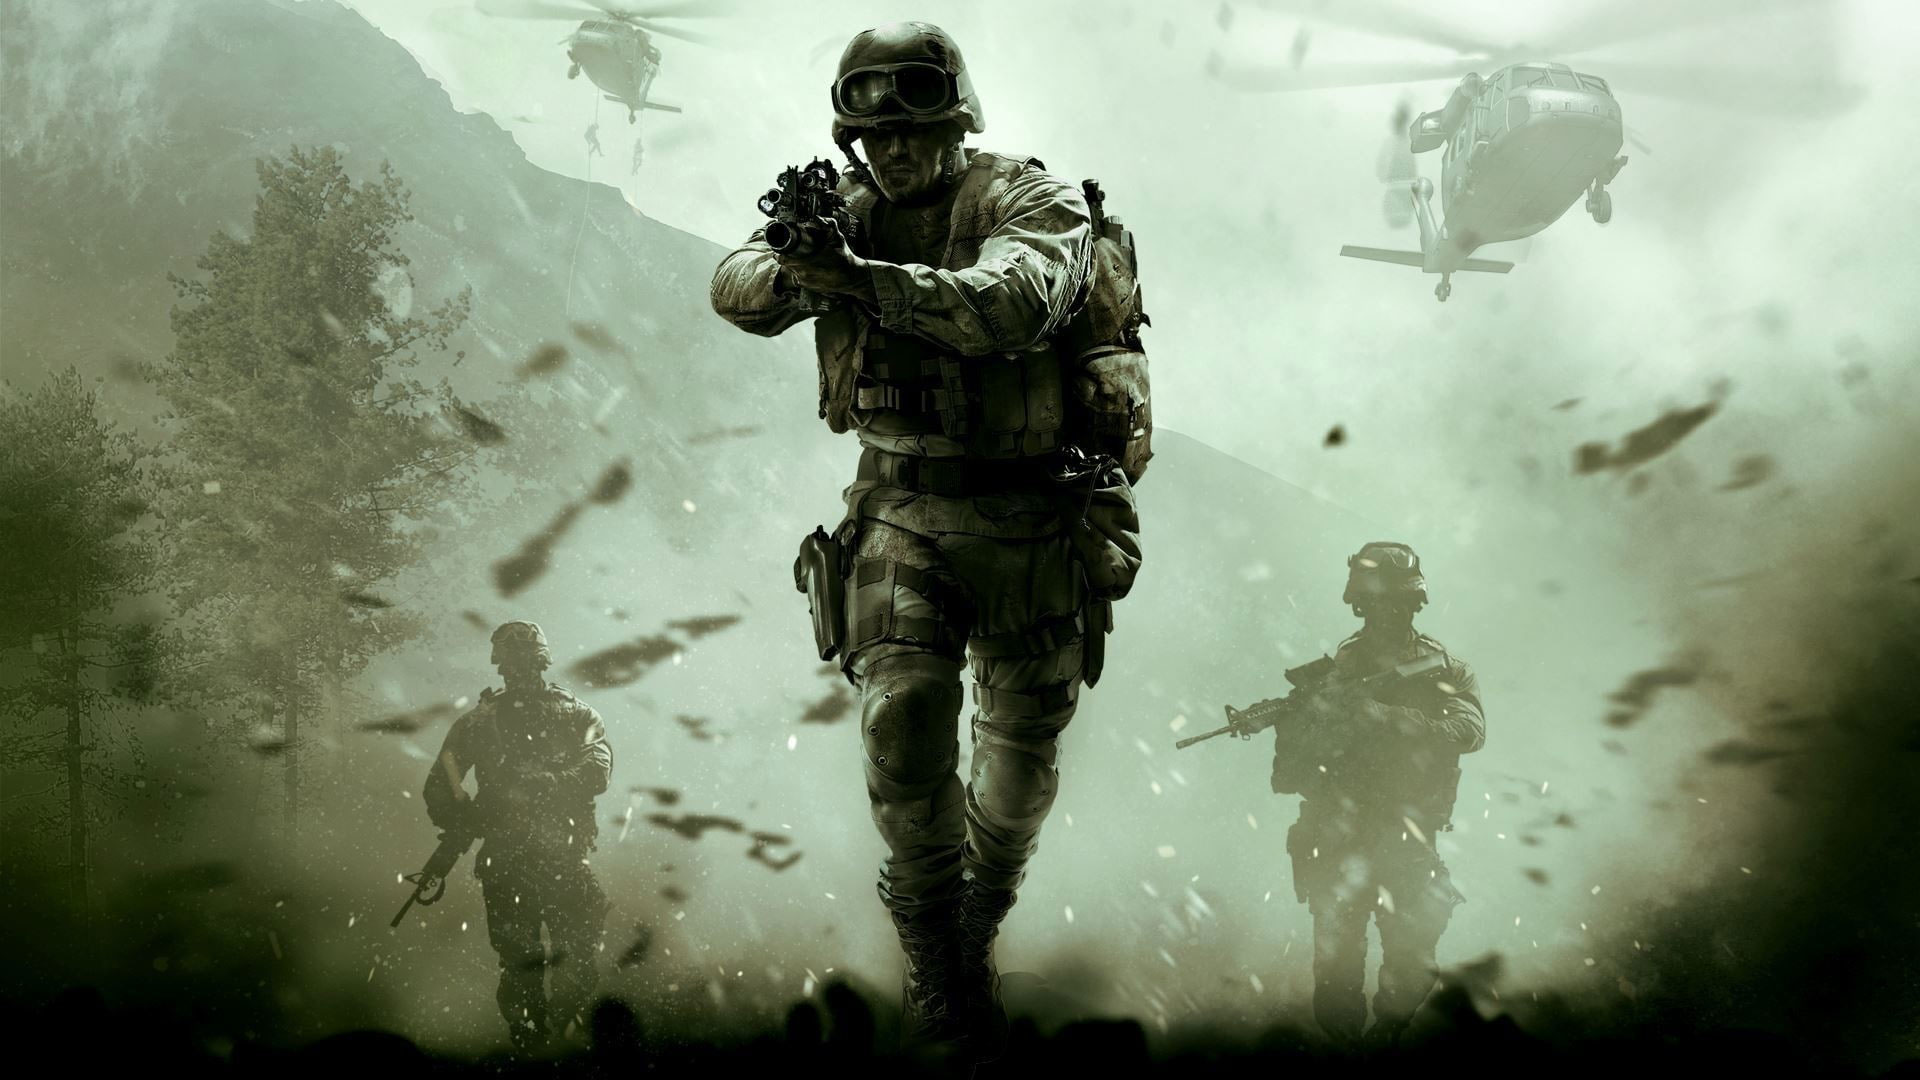 Wallpaper Call Of Duty Modern Warfare, Video Game